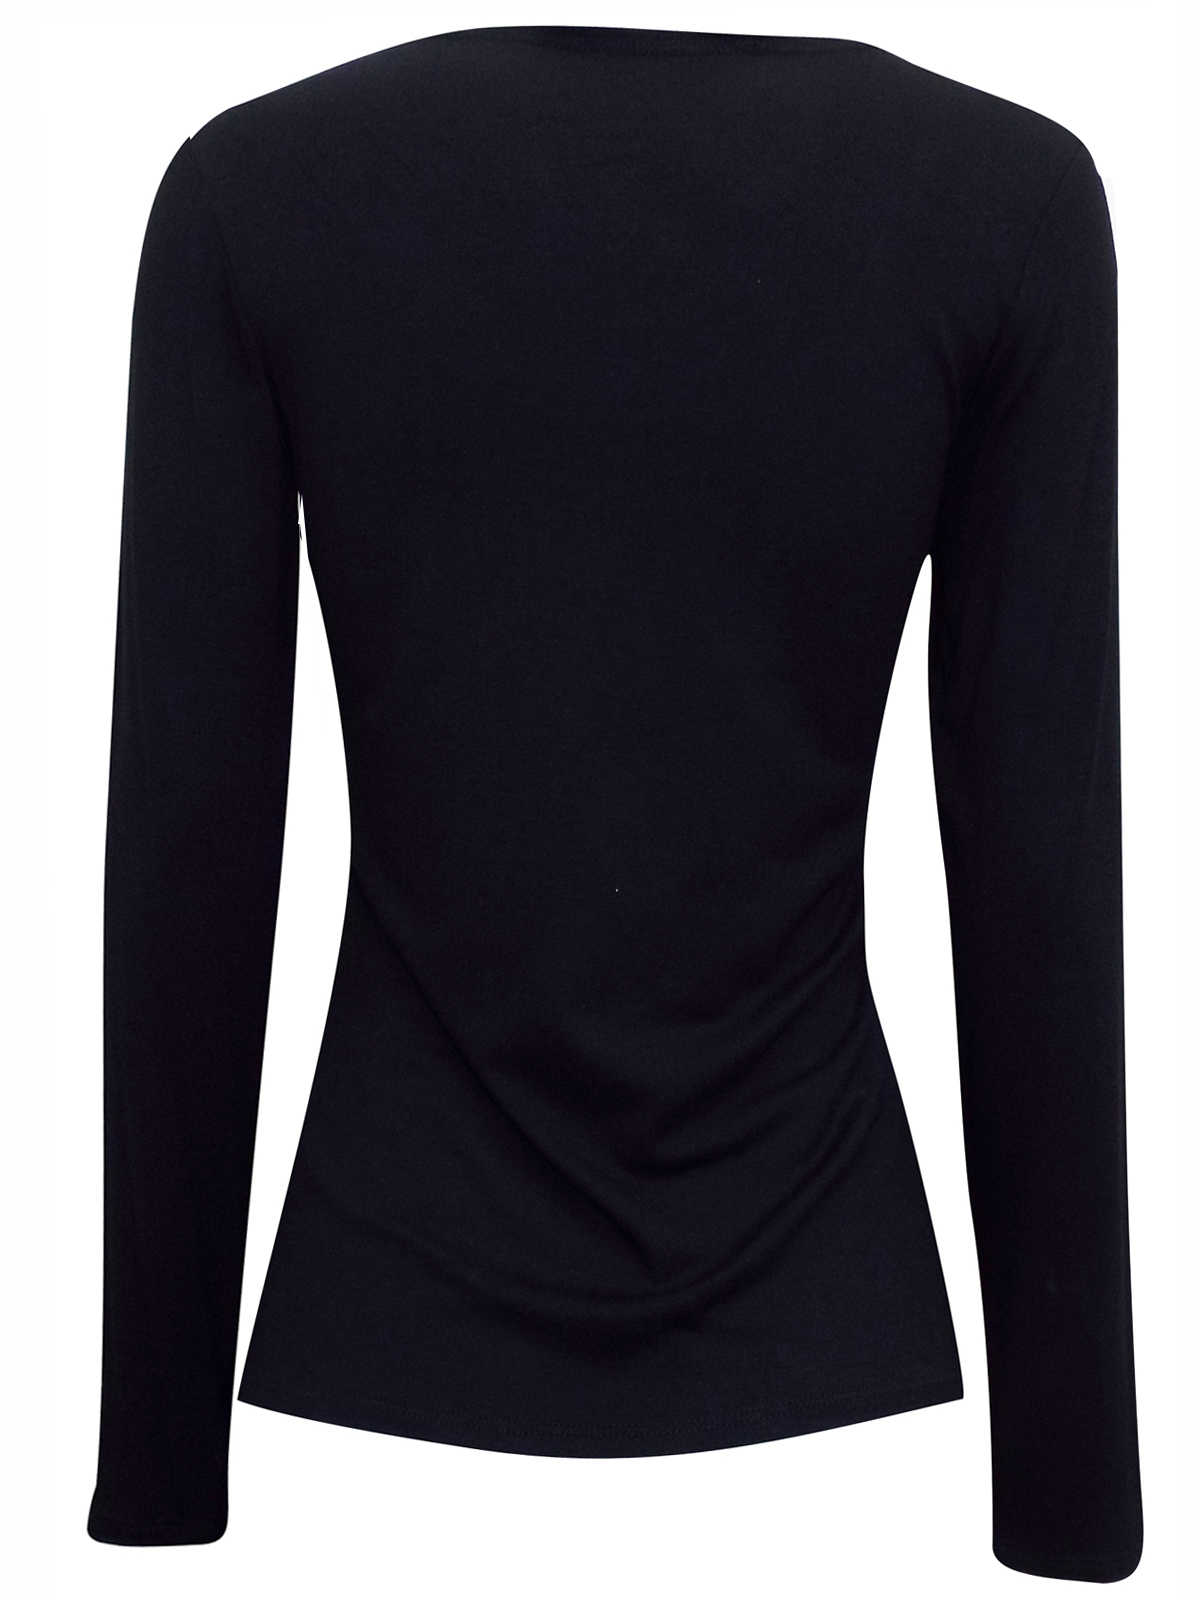 Kira - - Kira BLACK Scoop Neck Long Sleeve Jersey Top - Size 12 to 18 ...